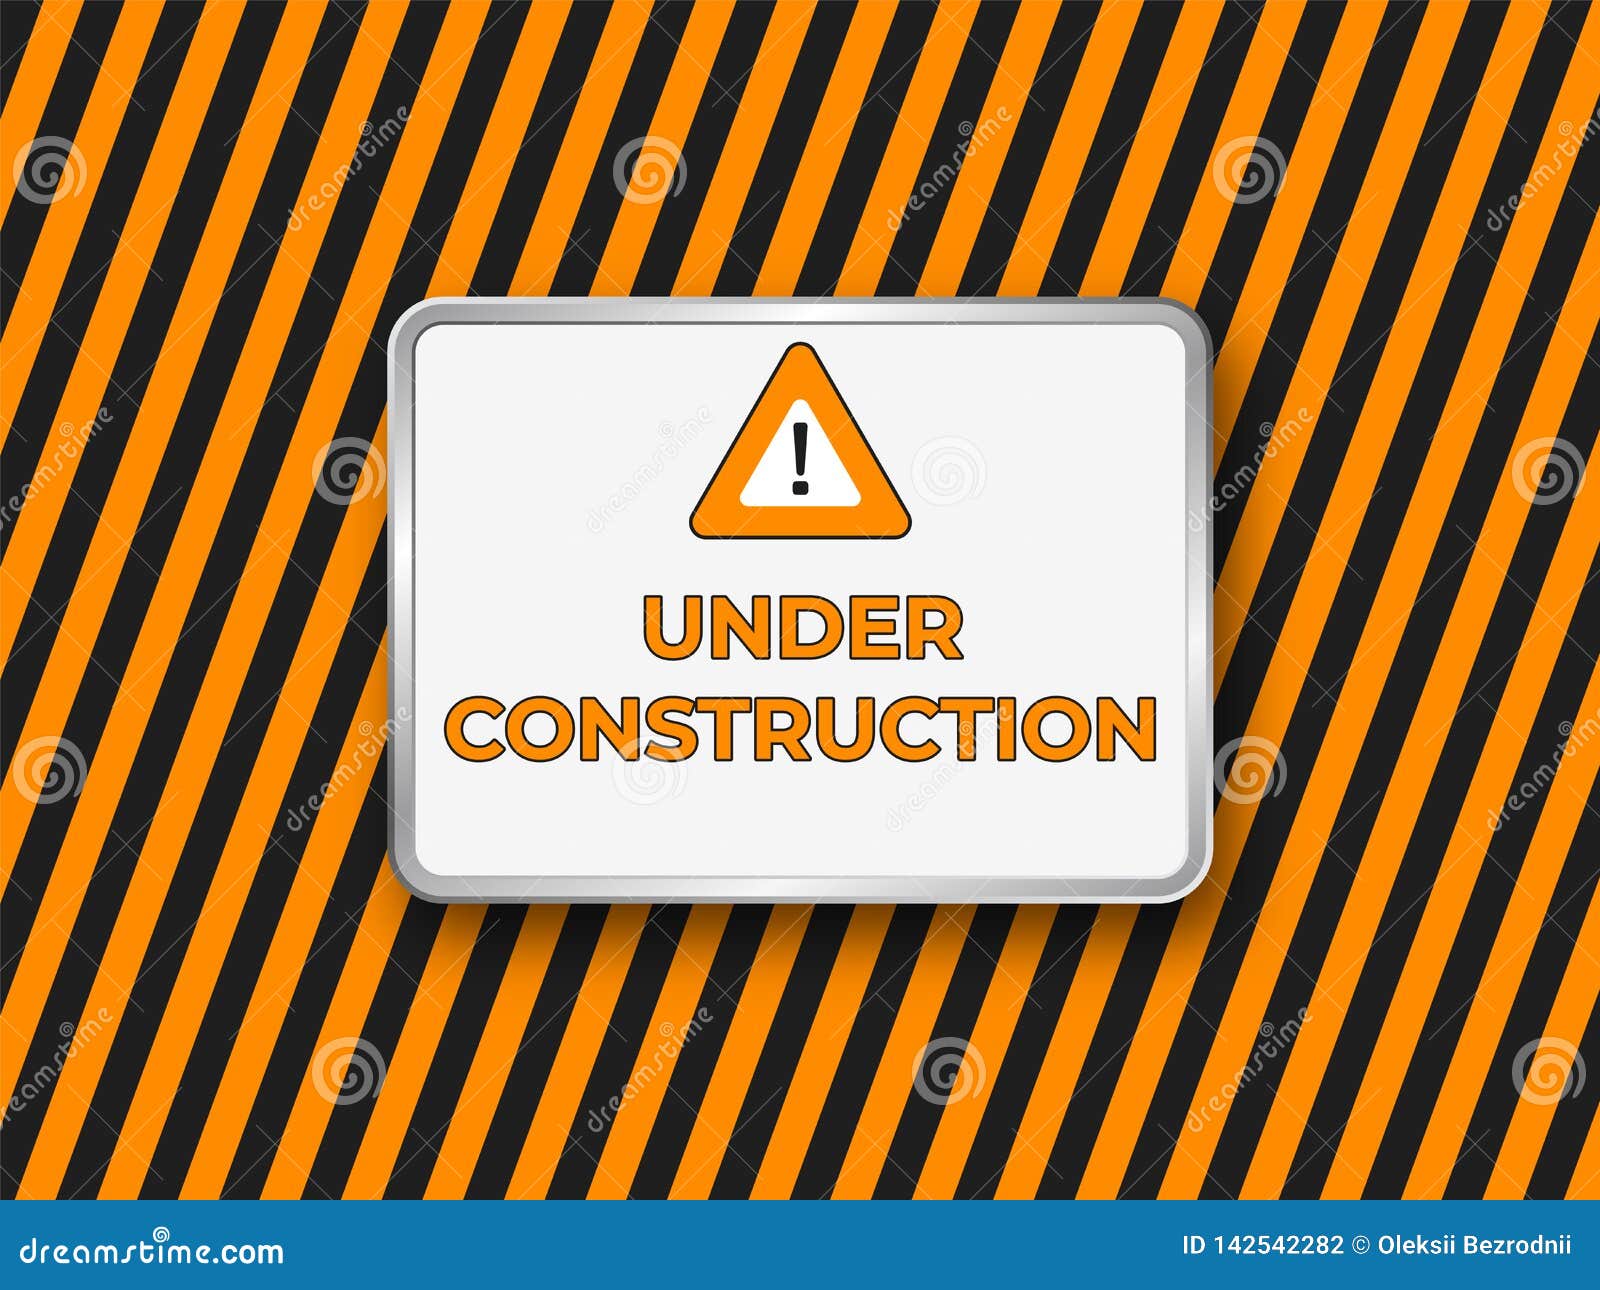 Under Construction Website Banner Stock Vector - Illustration of repair ...